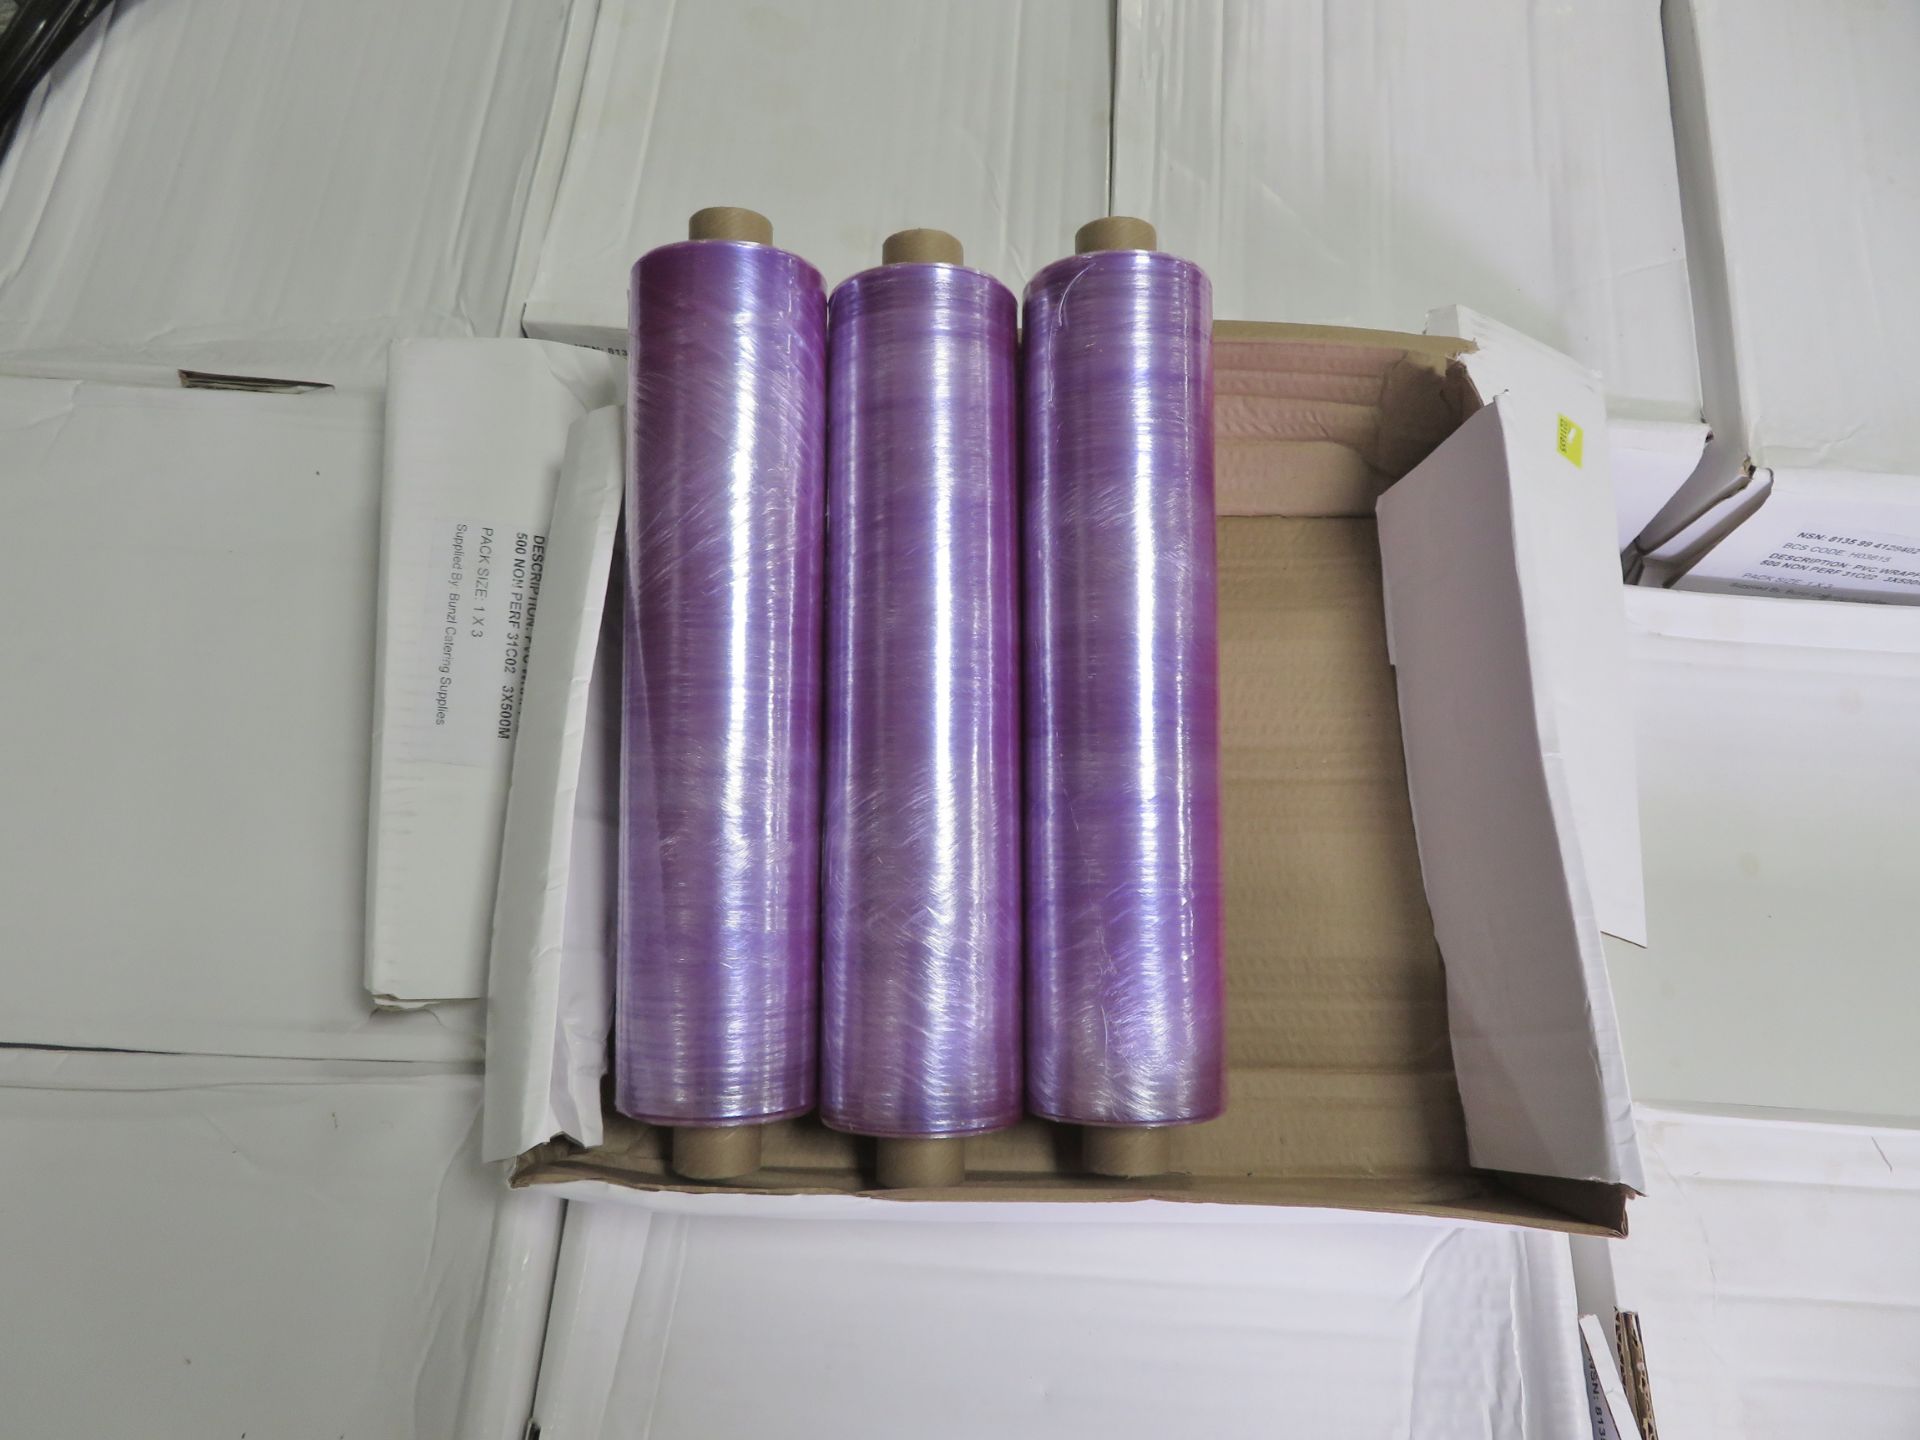 60x Rolls of PVC Cling Film 500m - Image 2 of 2